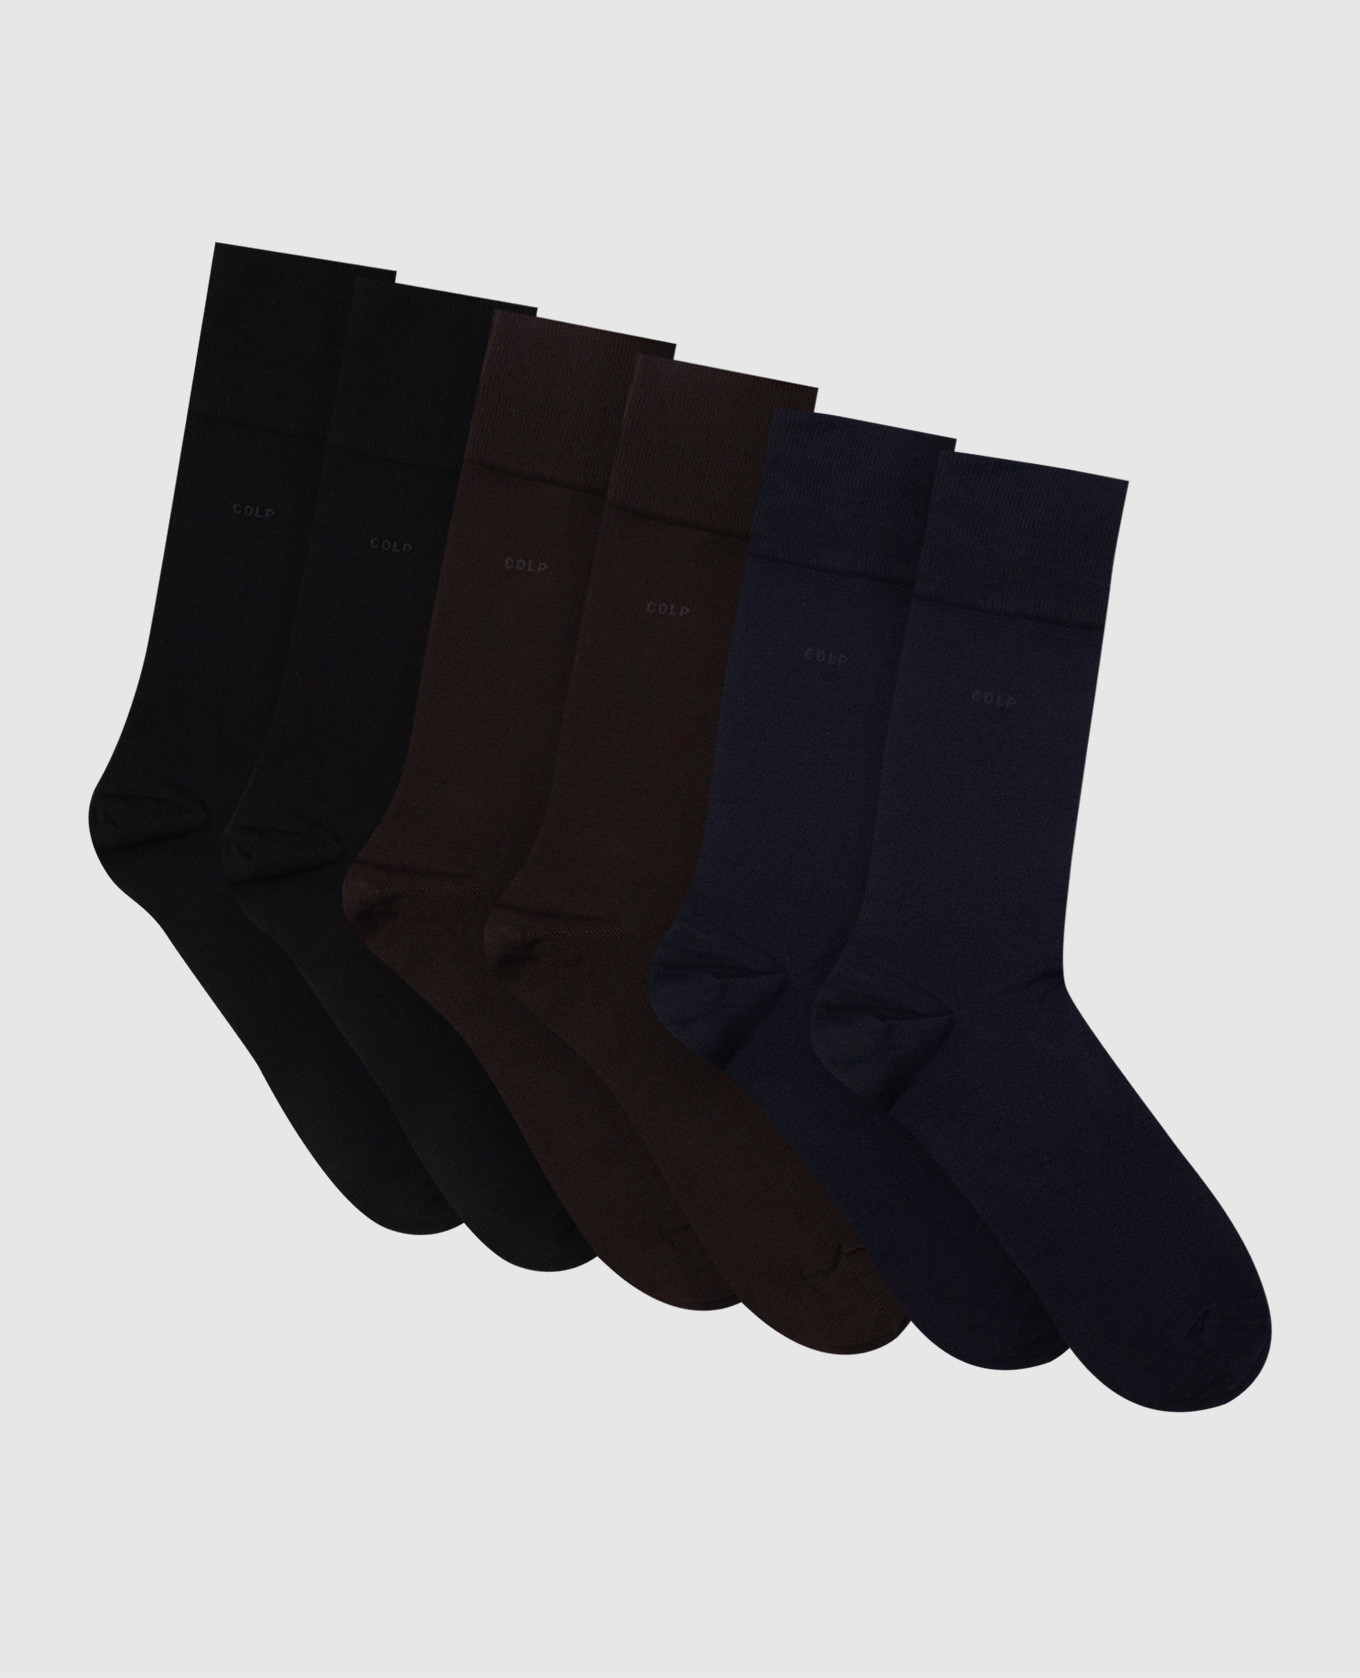 A set of socks with a logo